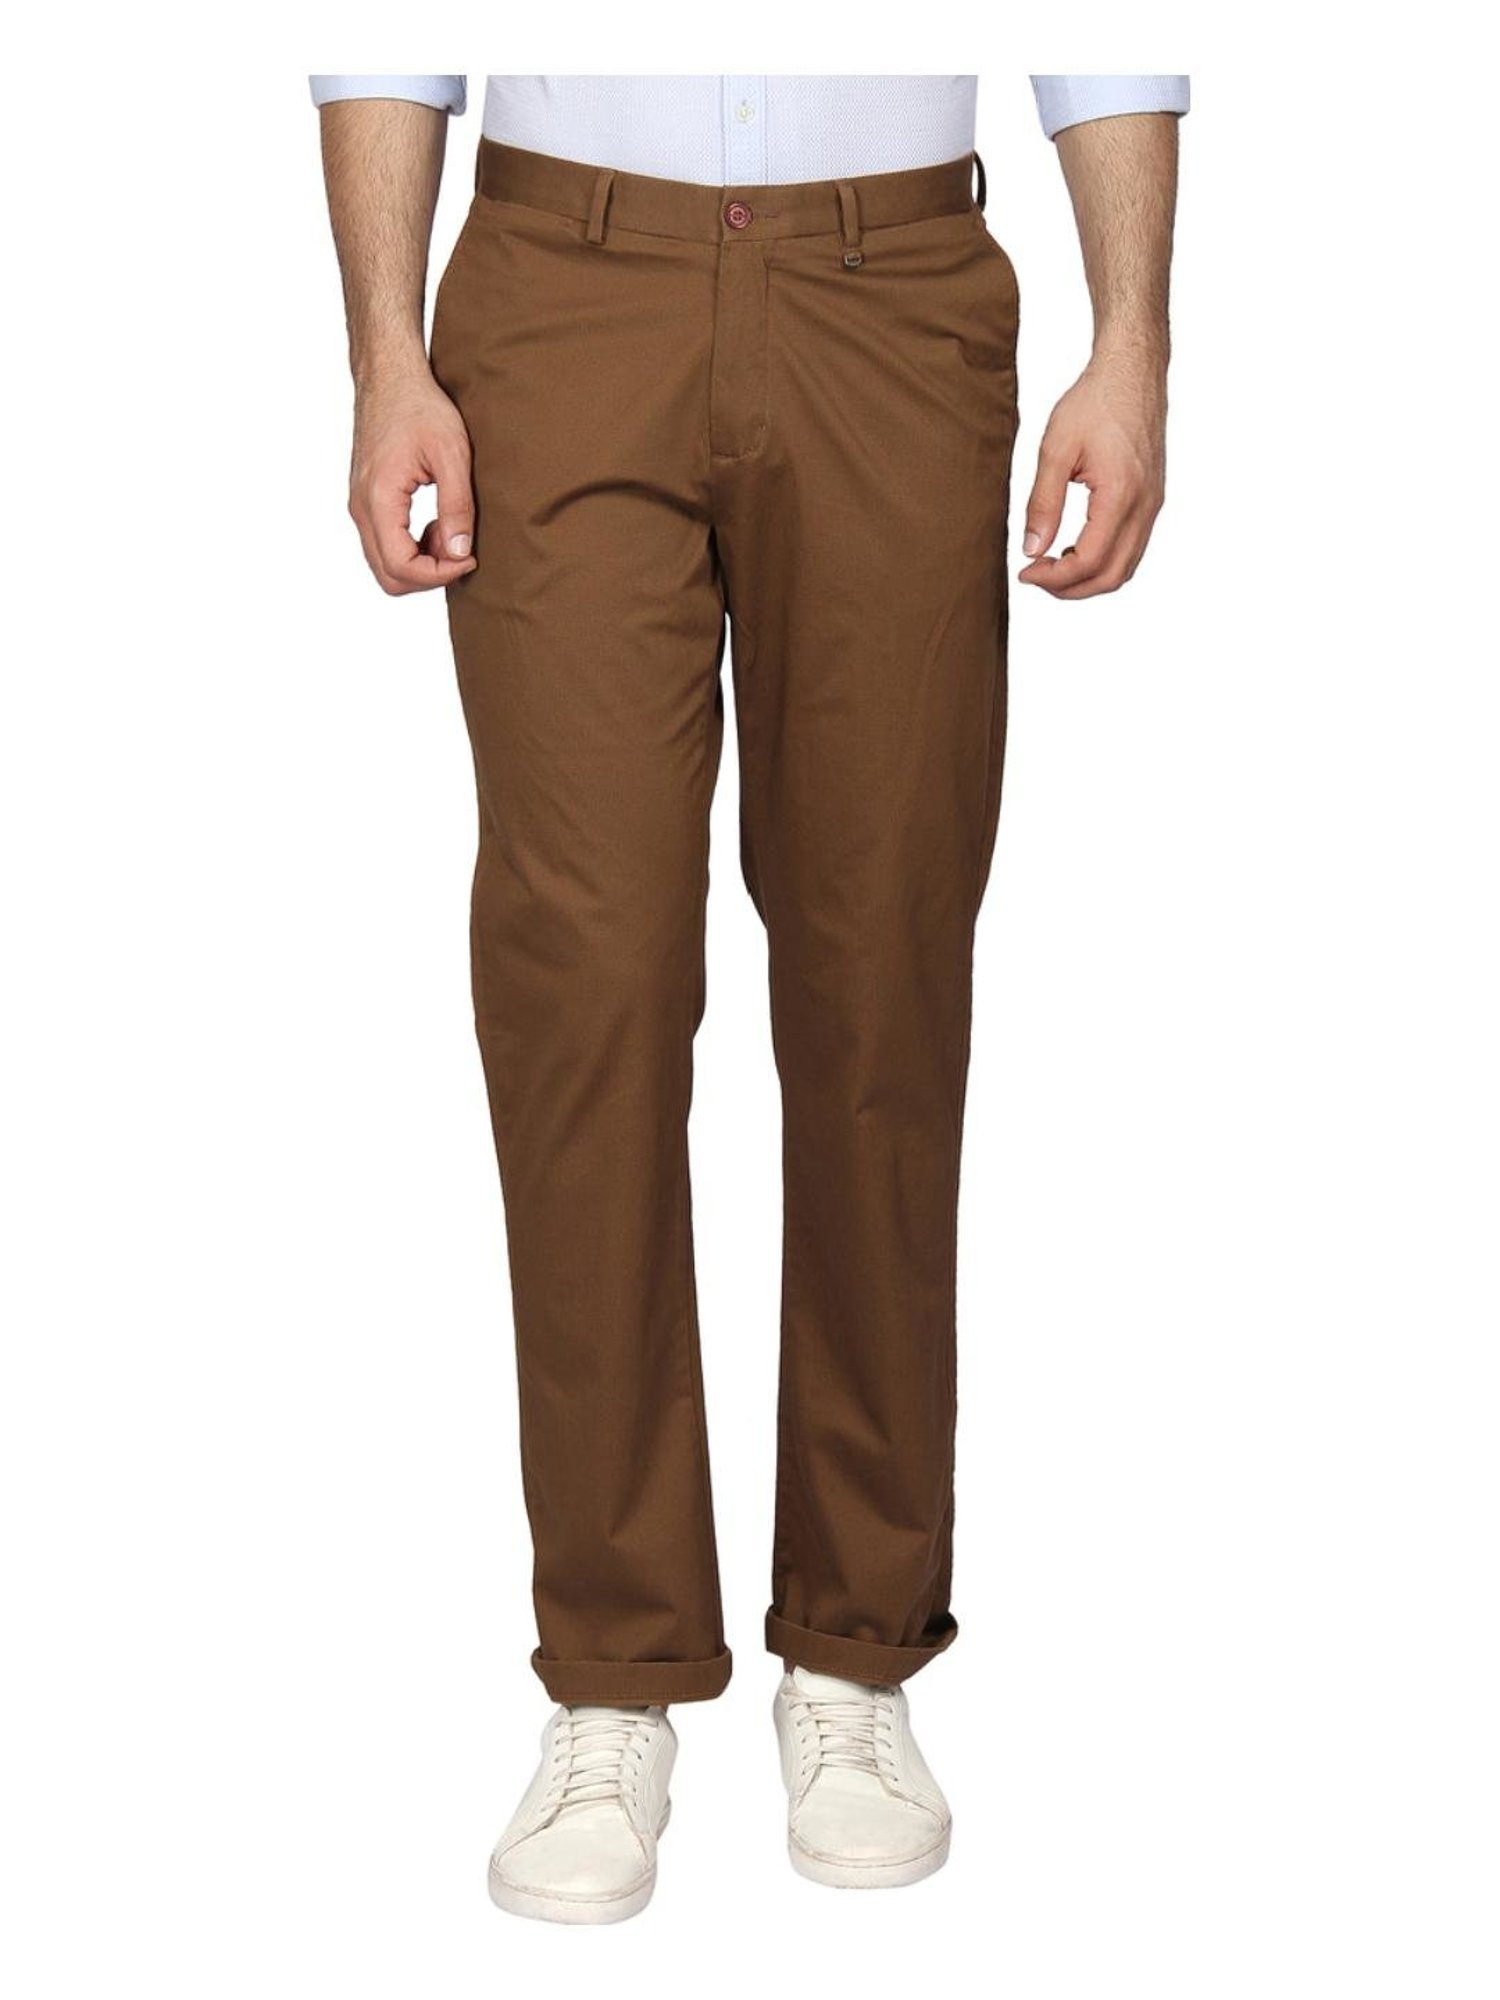 Buy blackberrys Men's Khaki Coloured Slim Trouser (Size: 32,  EK-KT-Honeycomb # Khaki) at Amazon.in